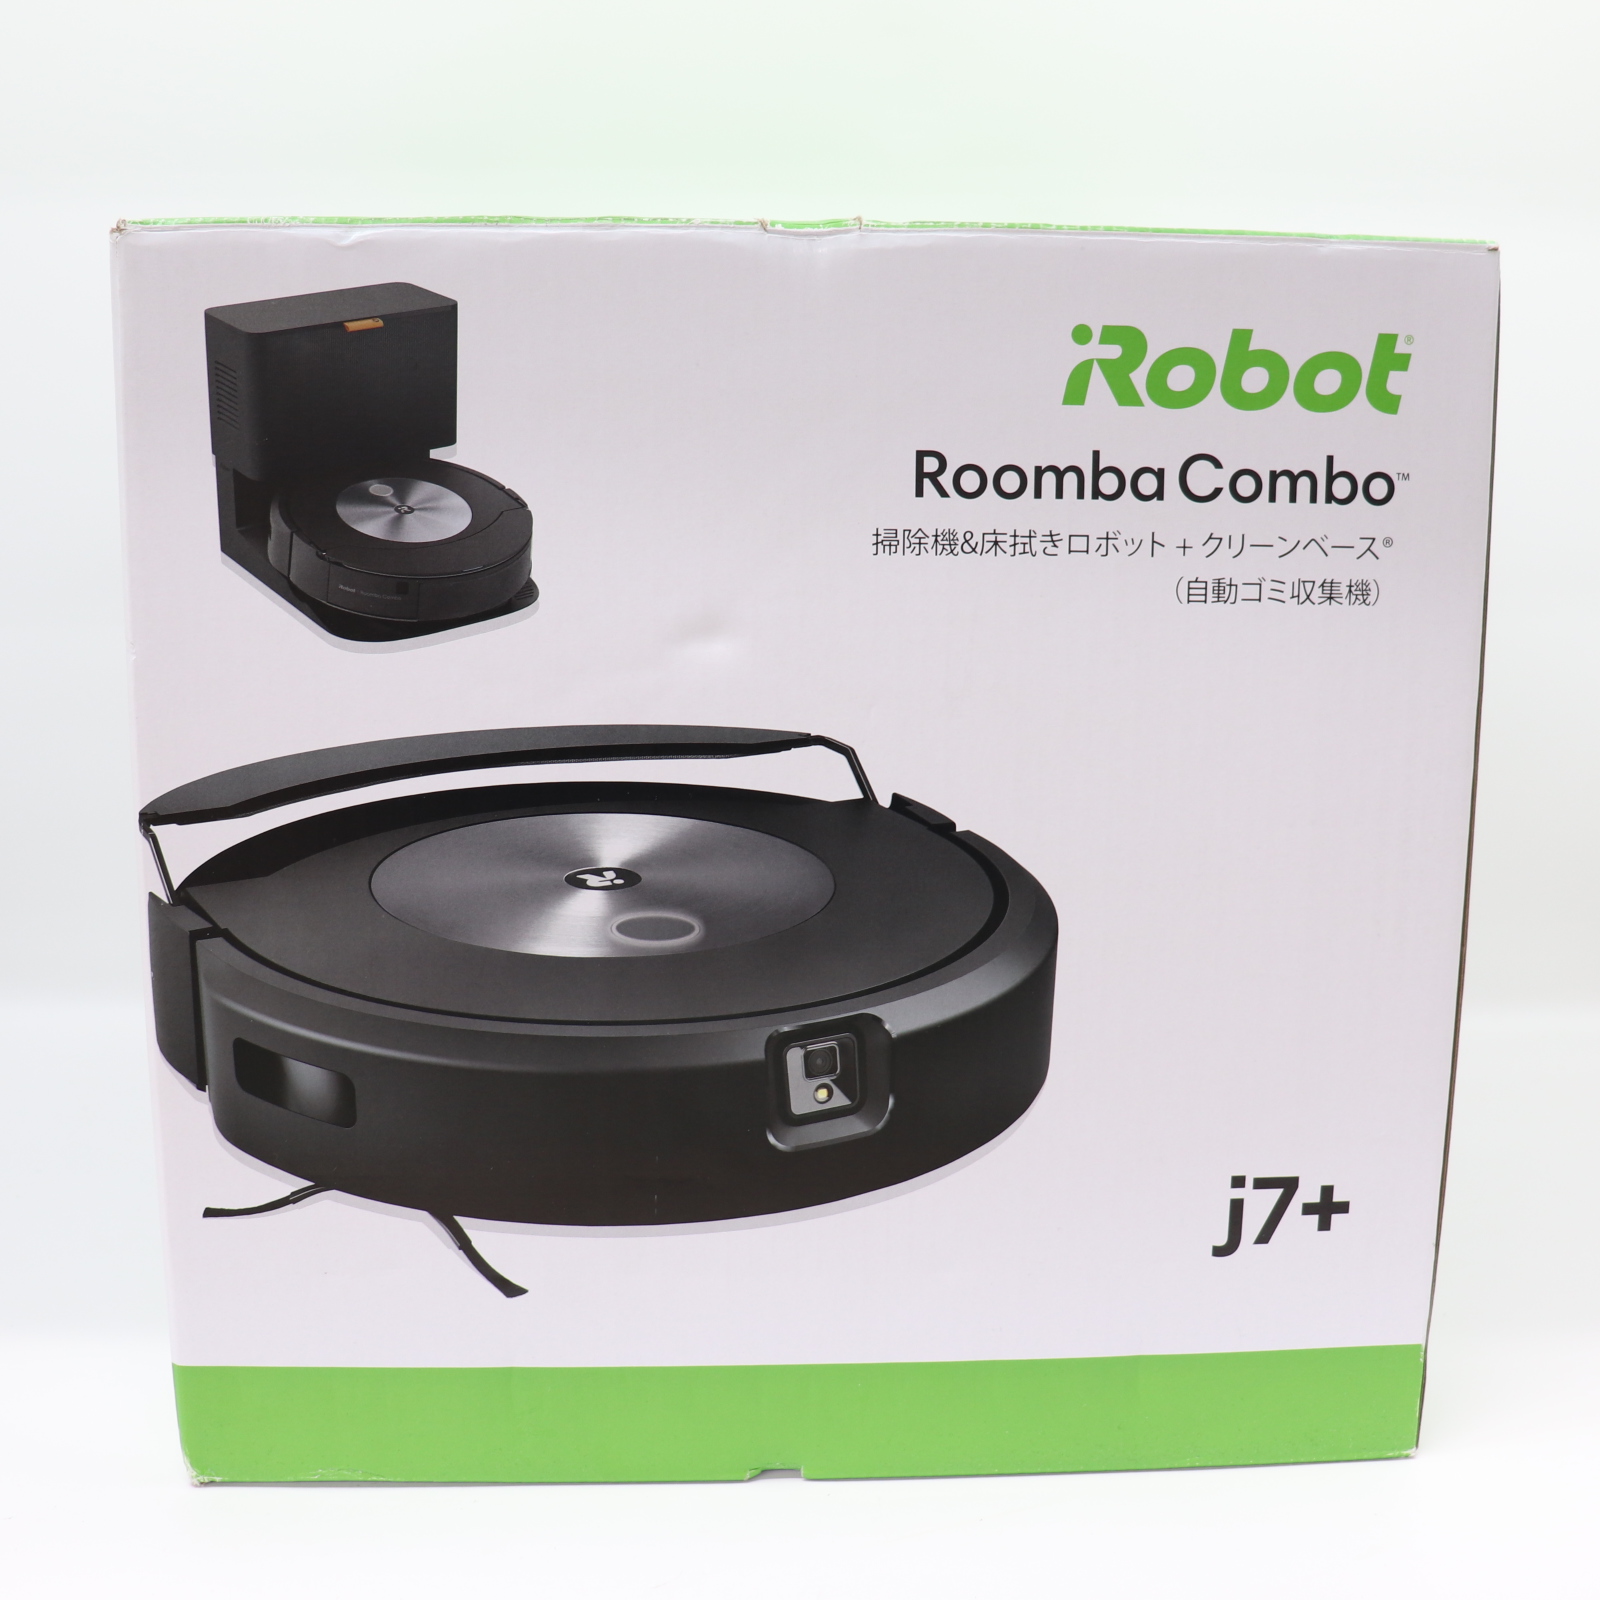 iRobot iRobot Roomba Combo j7＋ c755860（ブラック） ルンバ ロボット掃除機の商品画像